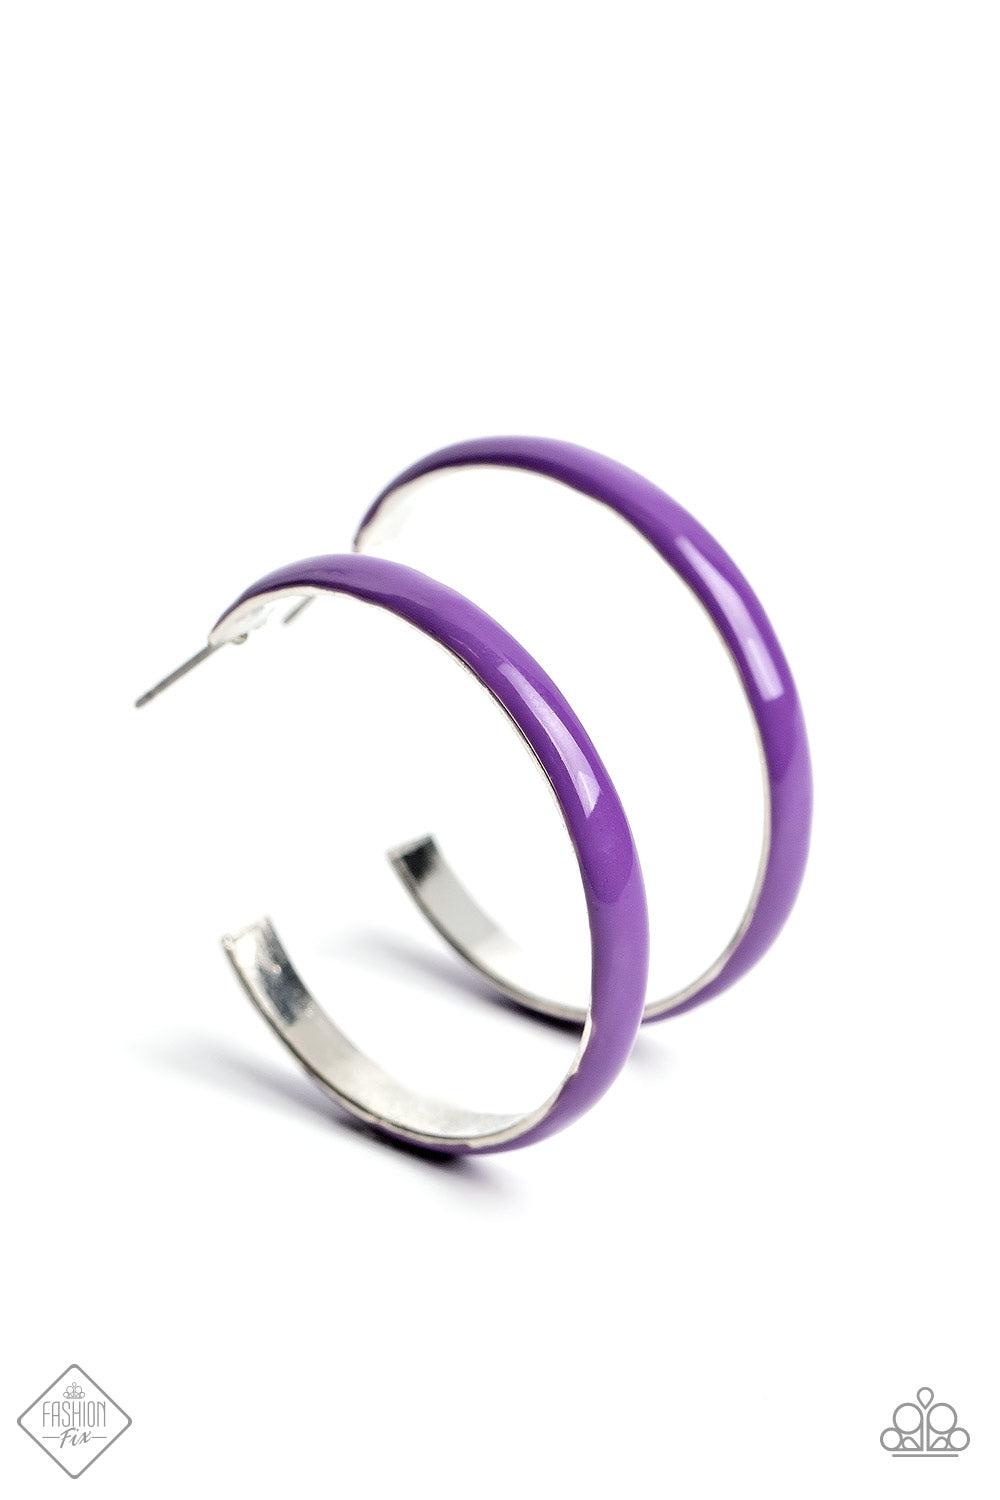 Groovy Glissando Purple Hoop Earrings - Paparazzi Accessories- lightbox - CarasShop.com - $5 Jewelry by Cara Jewels